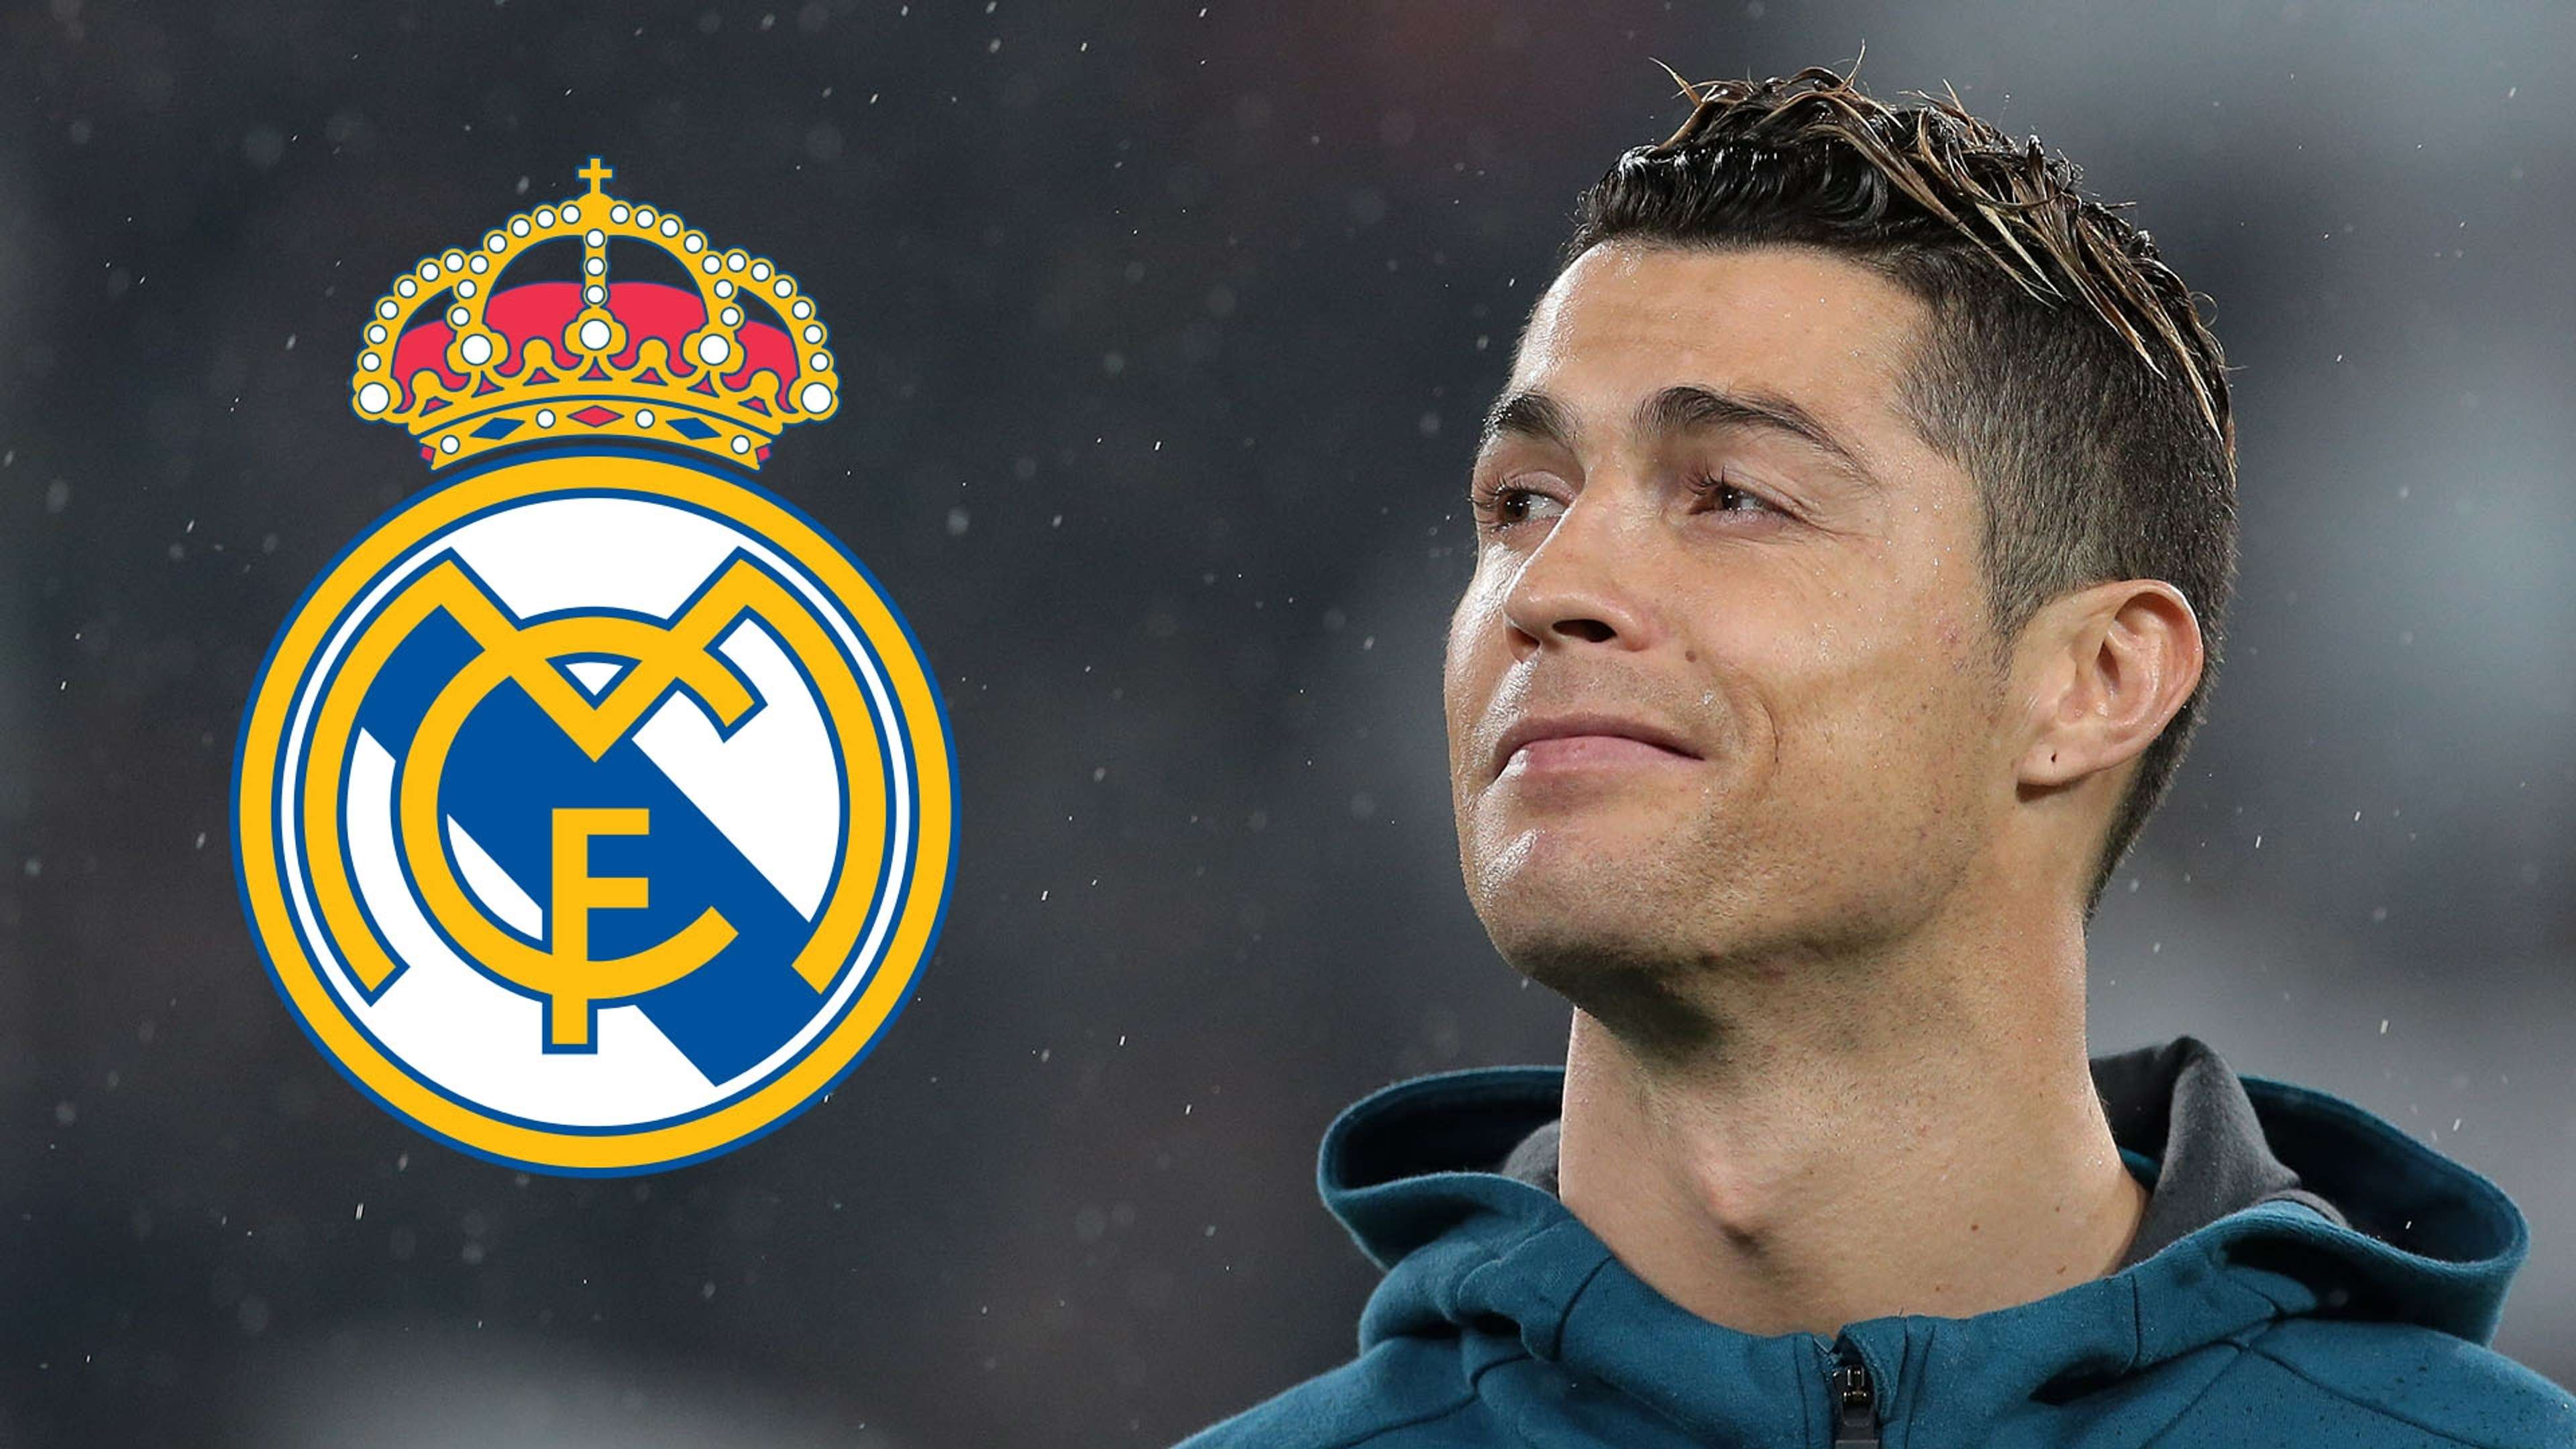 Ronaldo Real Madrid crest